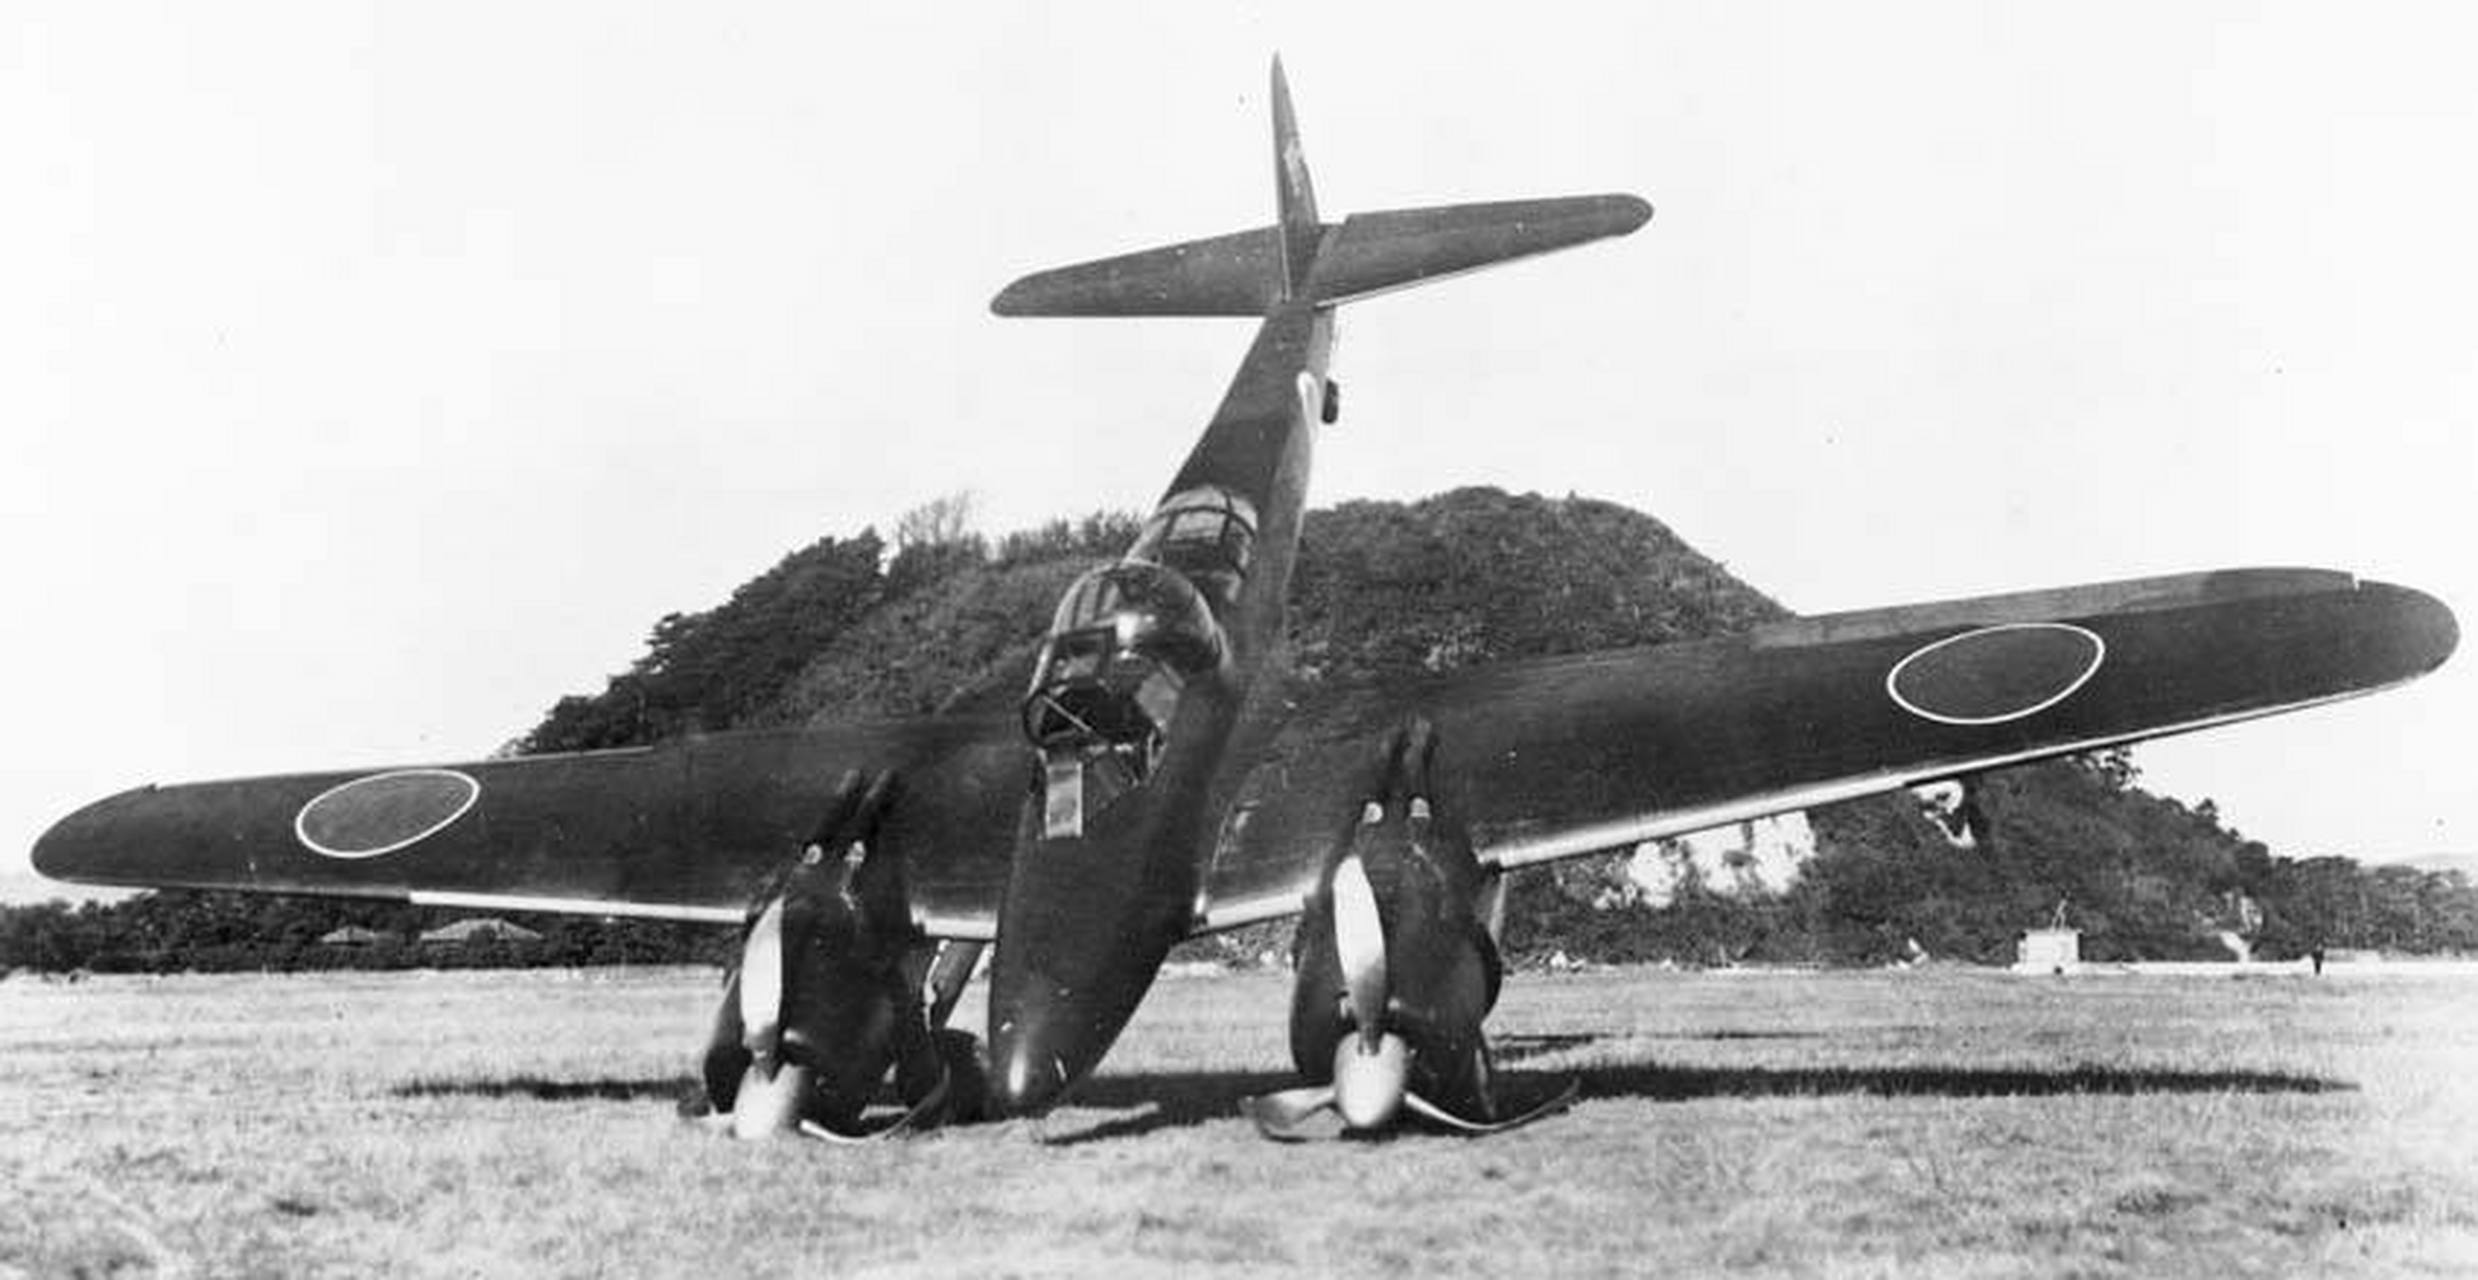 【j5n天雷双发重型战斗机】是第二次世界大战末期研发的双发重型战斗